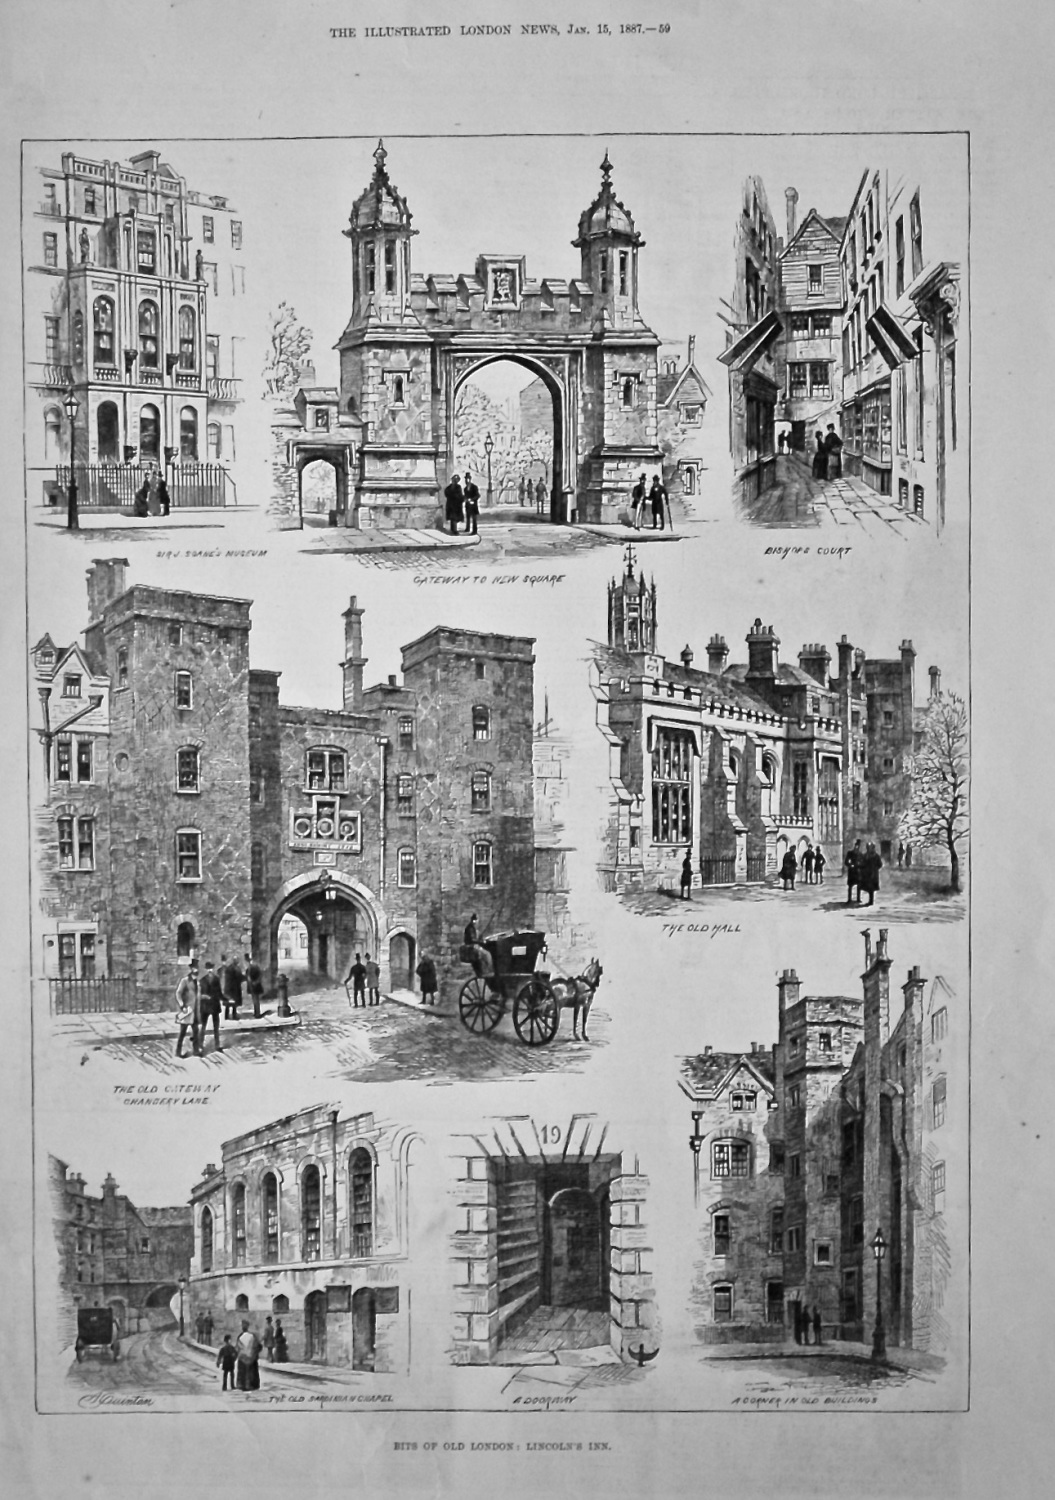 Bits of Old London : Lincoln's Inn.  1887.